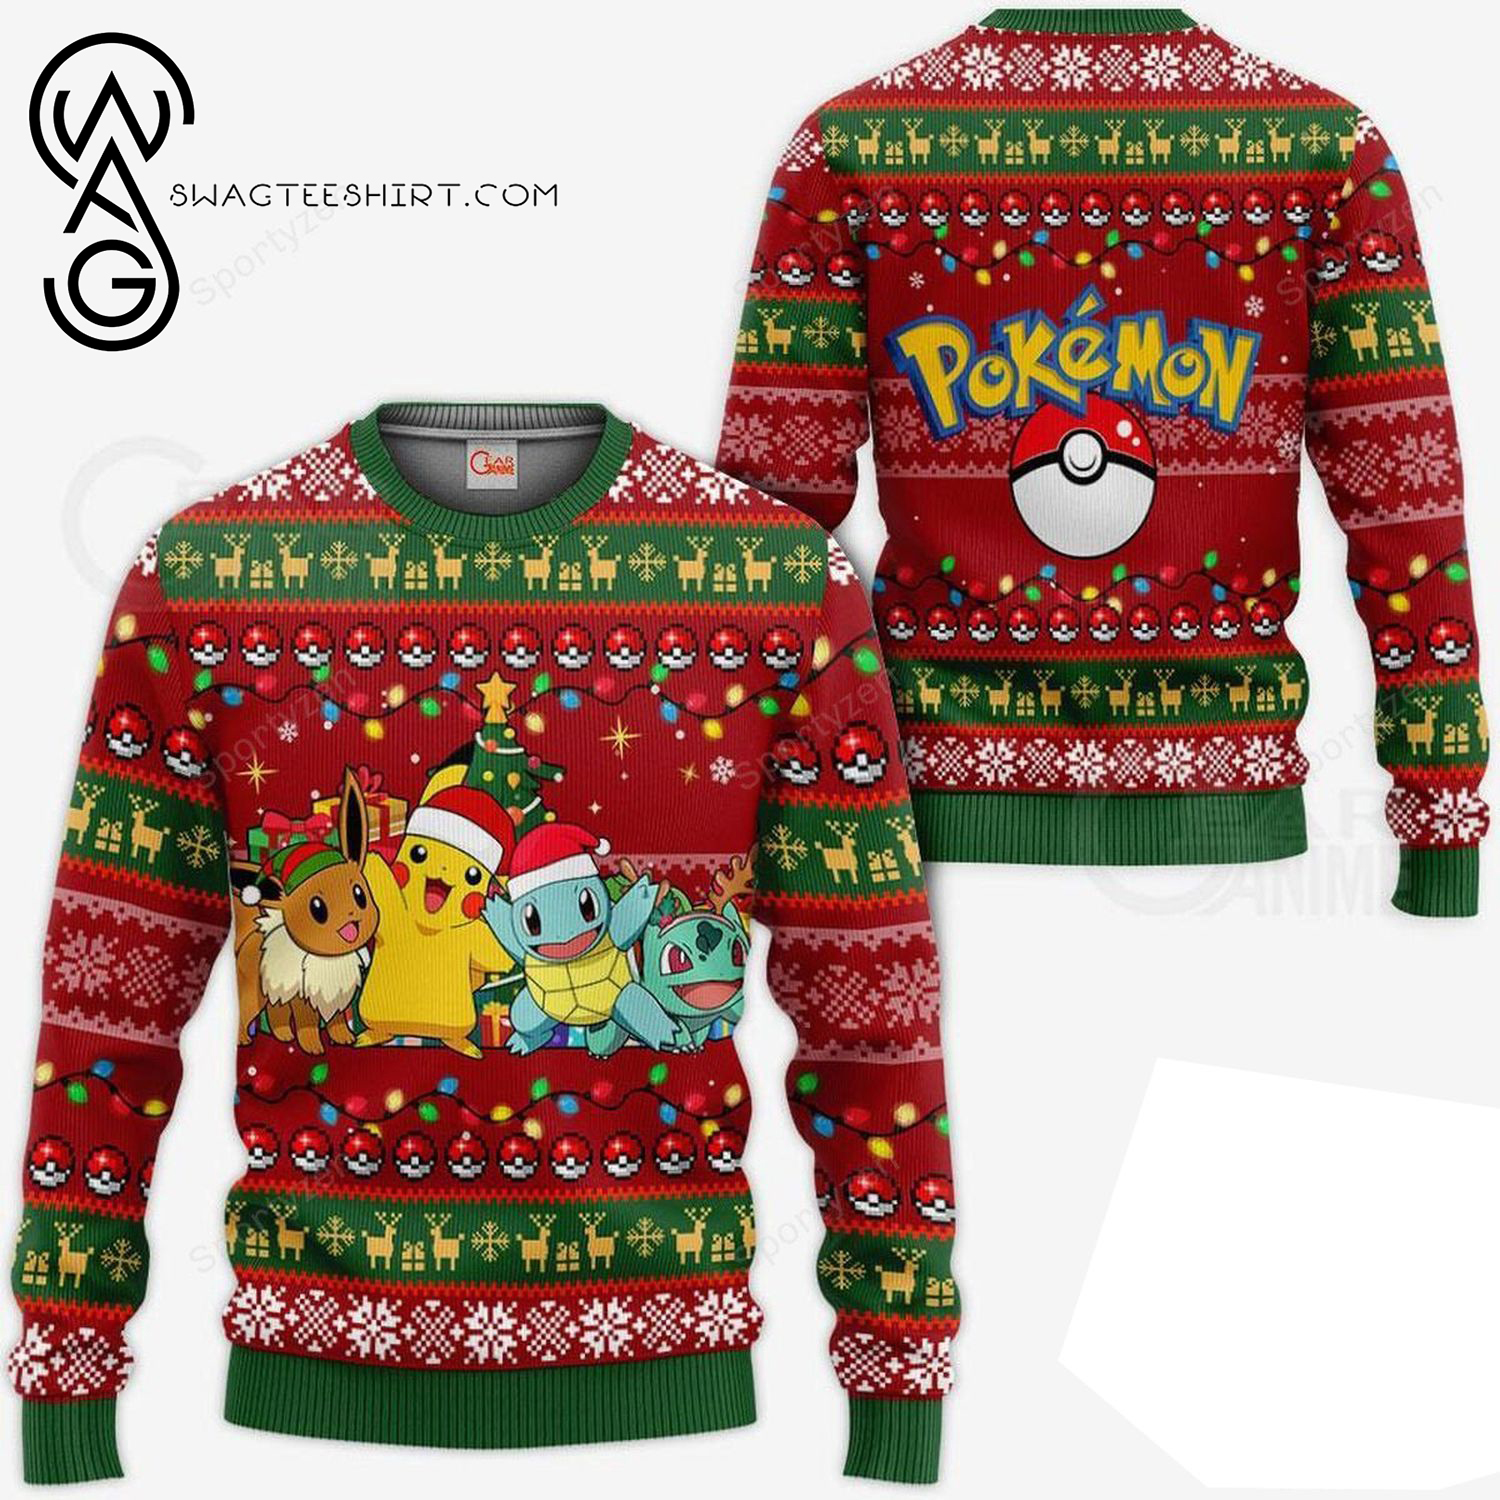 Pokemon Characters And Christmas Tree Full Print Ugly Christmas Sweater